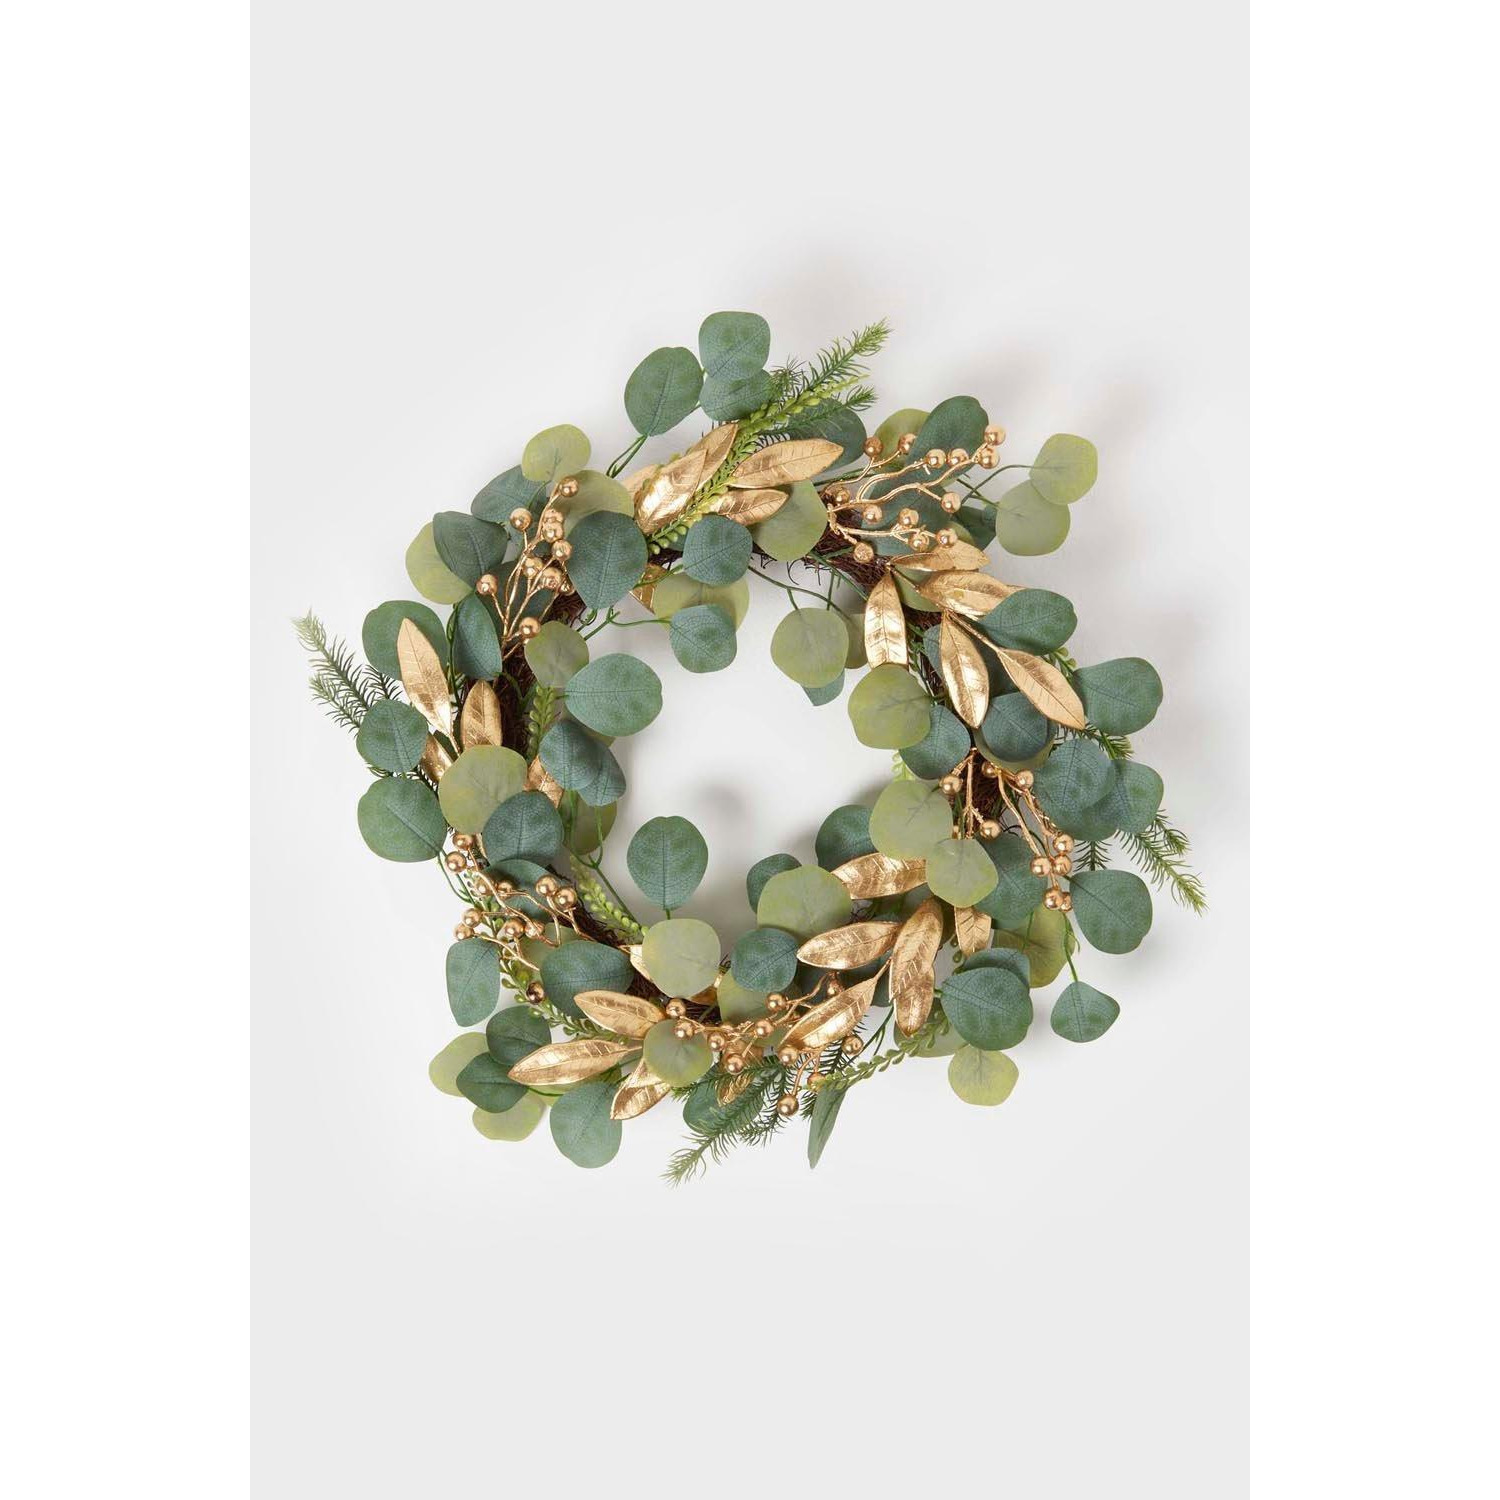 Green & Gold Eucalyptus Christmas Wreath, 56 cm - image 1